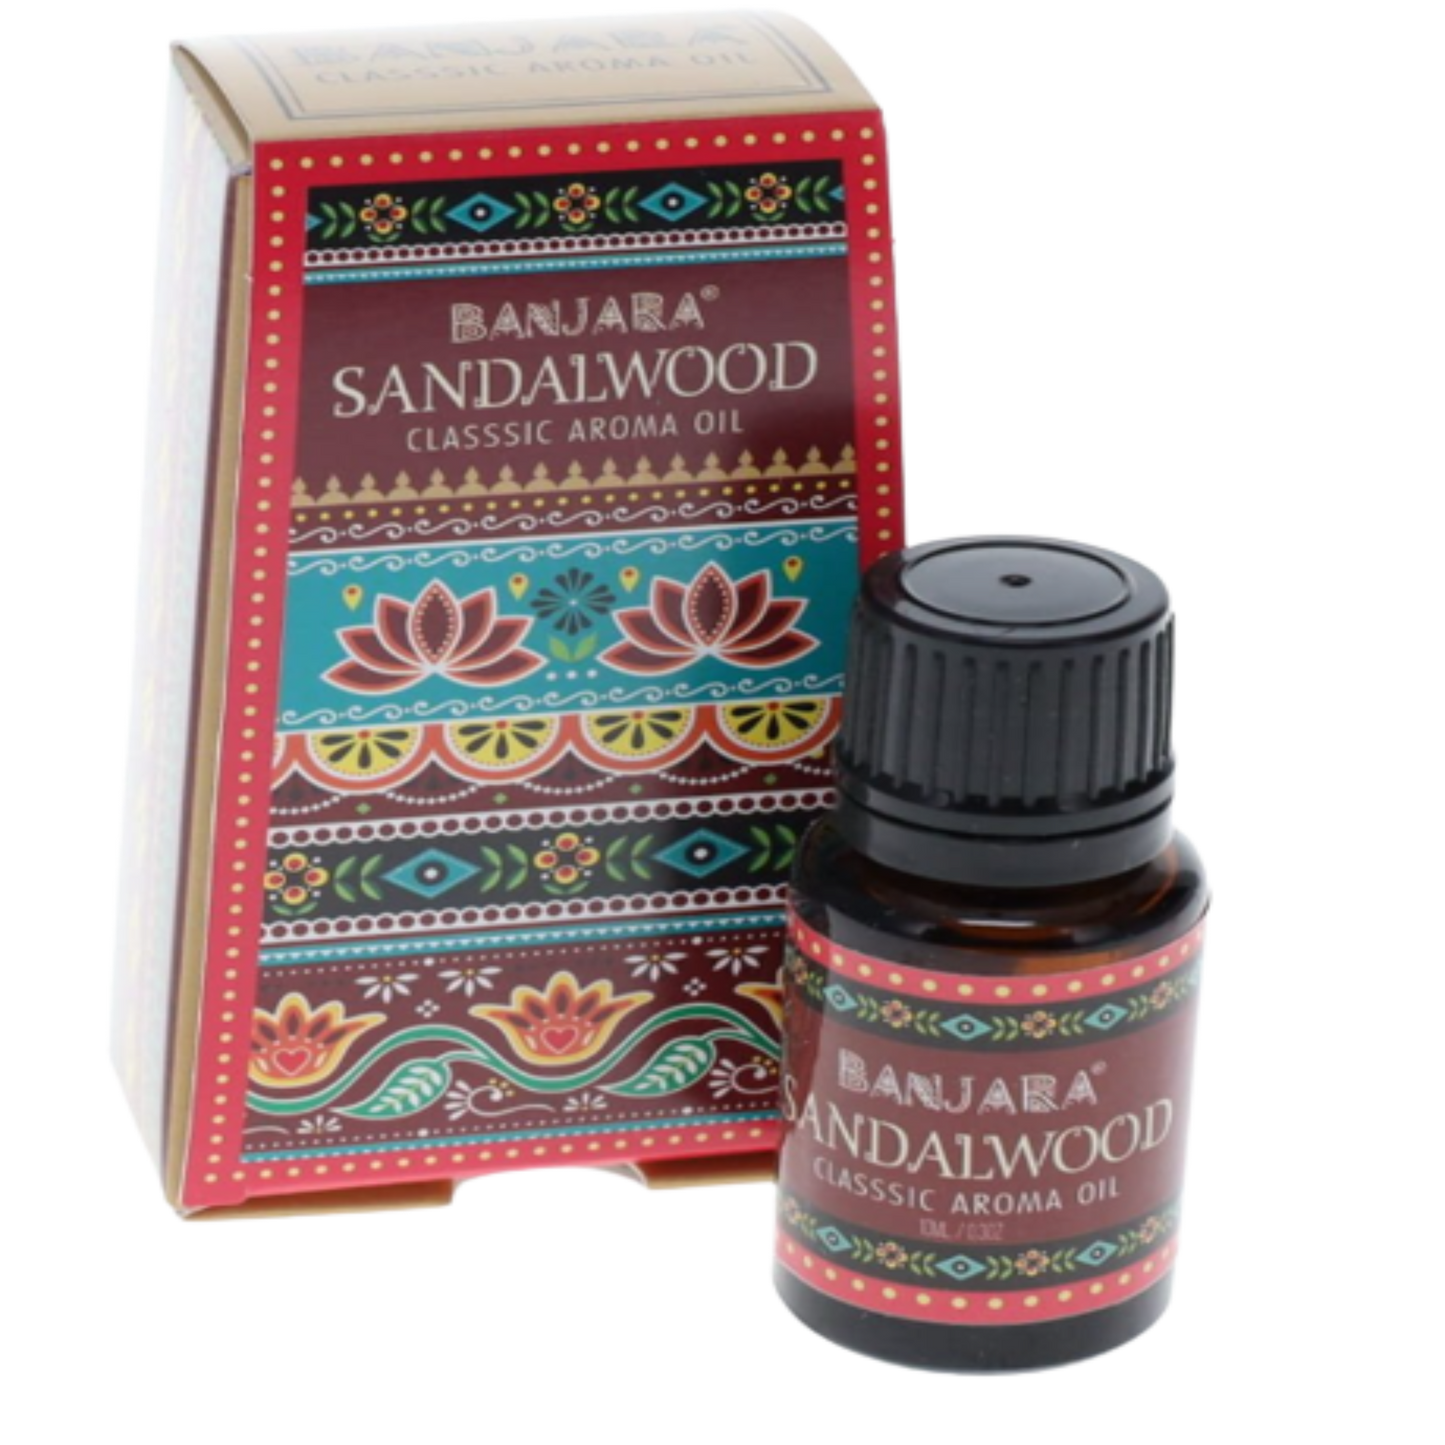 Banjarra Classic Aroma Oil Sandalwood